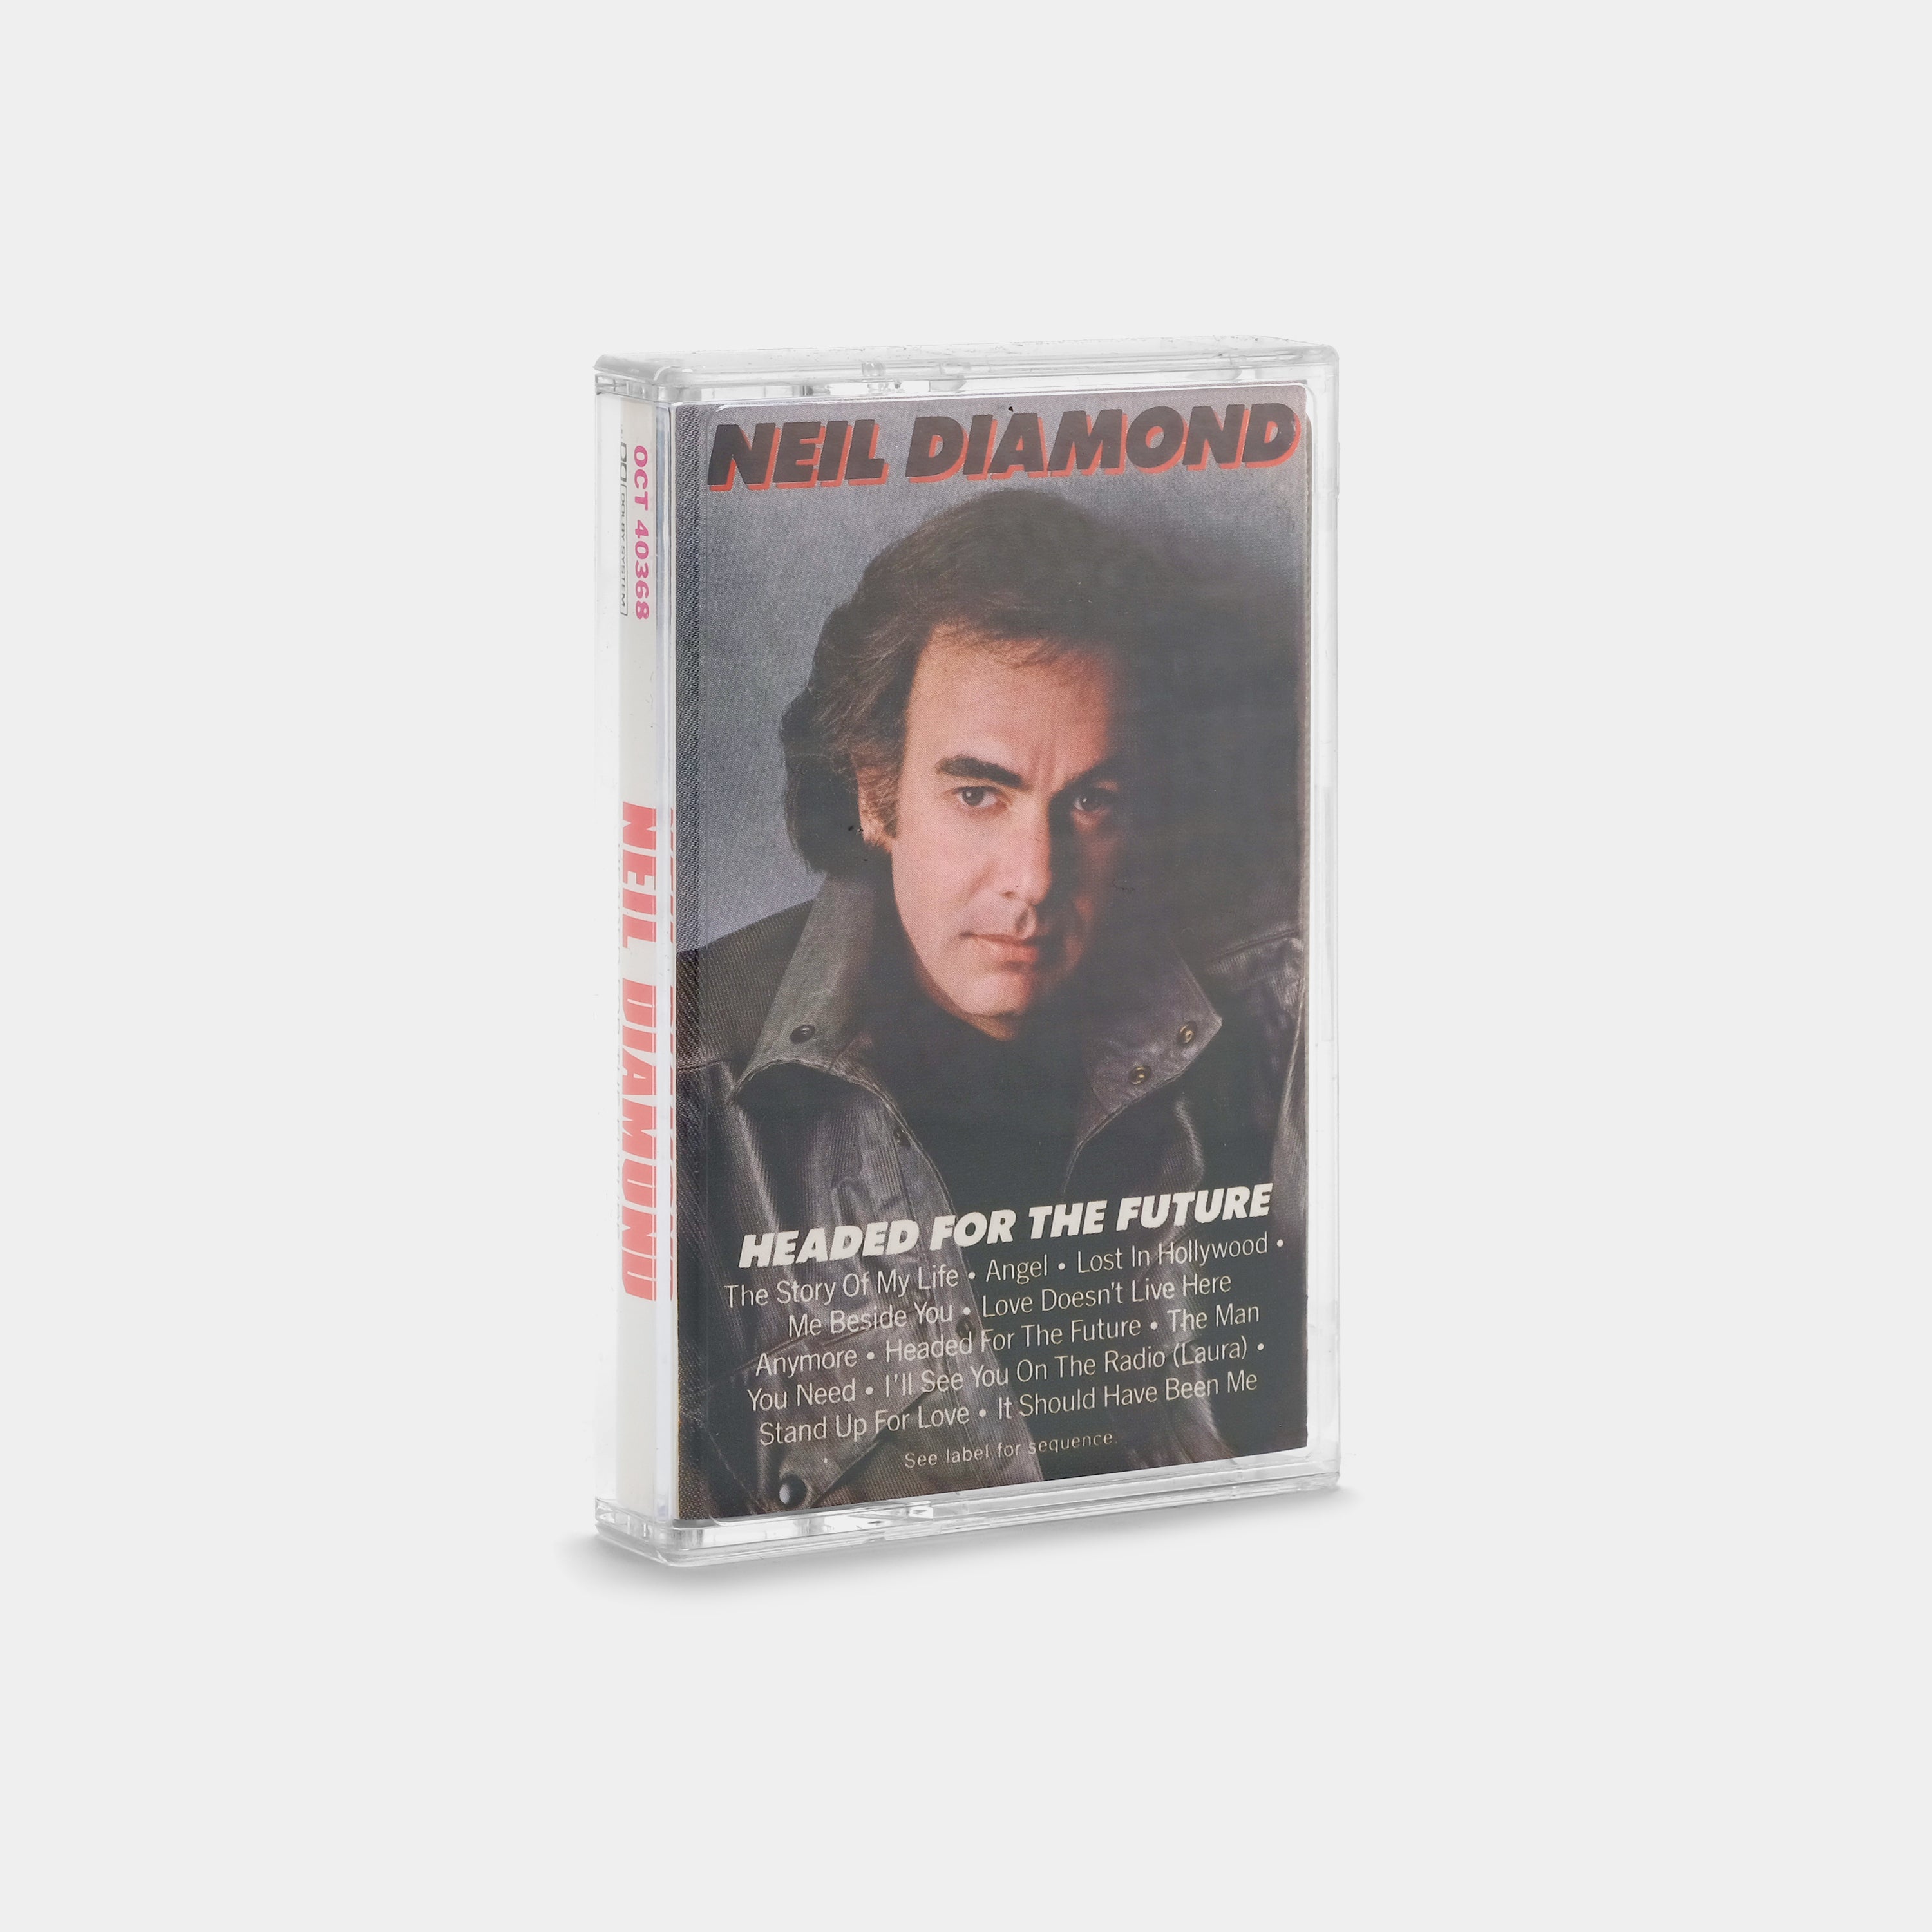 Neil Diamond - Headed to the Future Cassette Tape